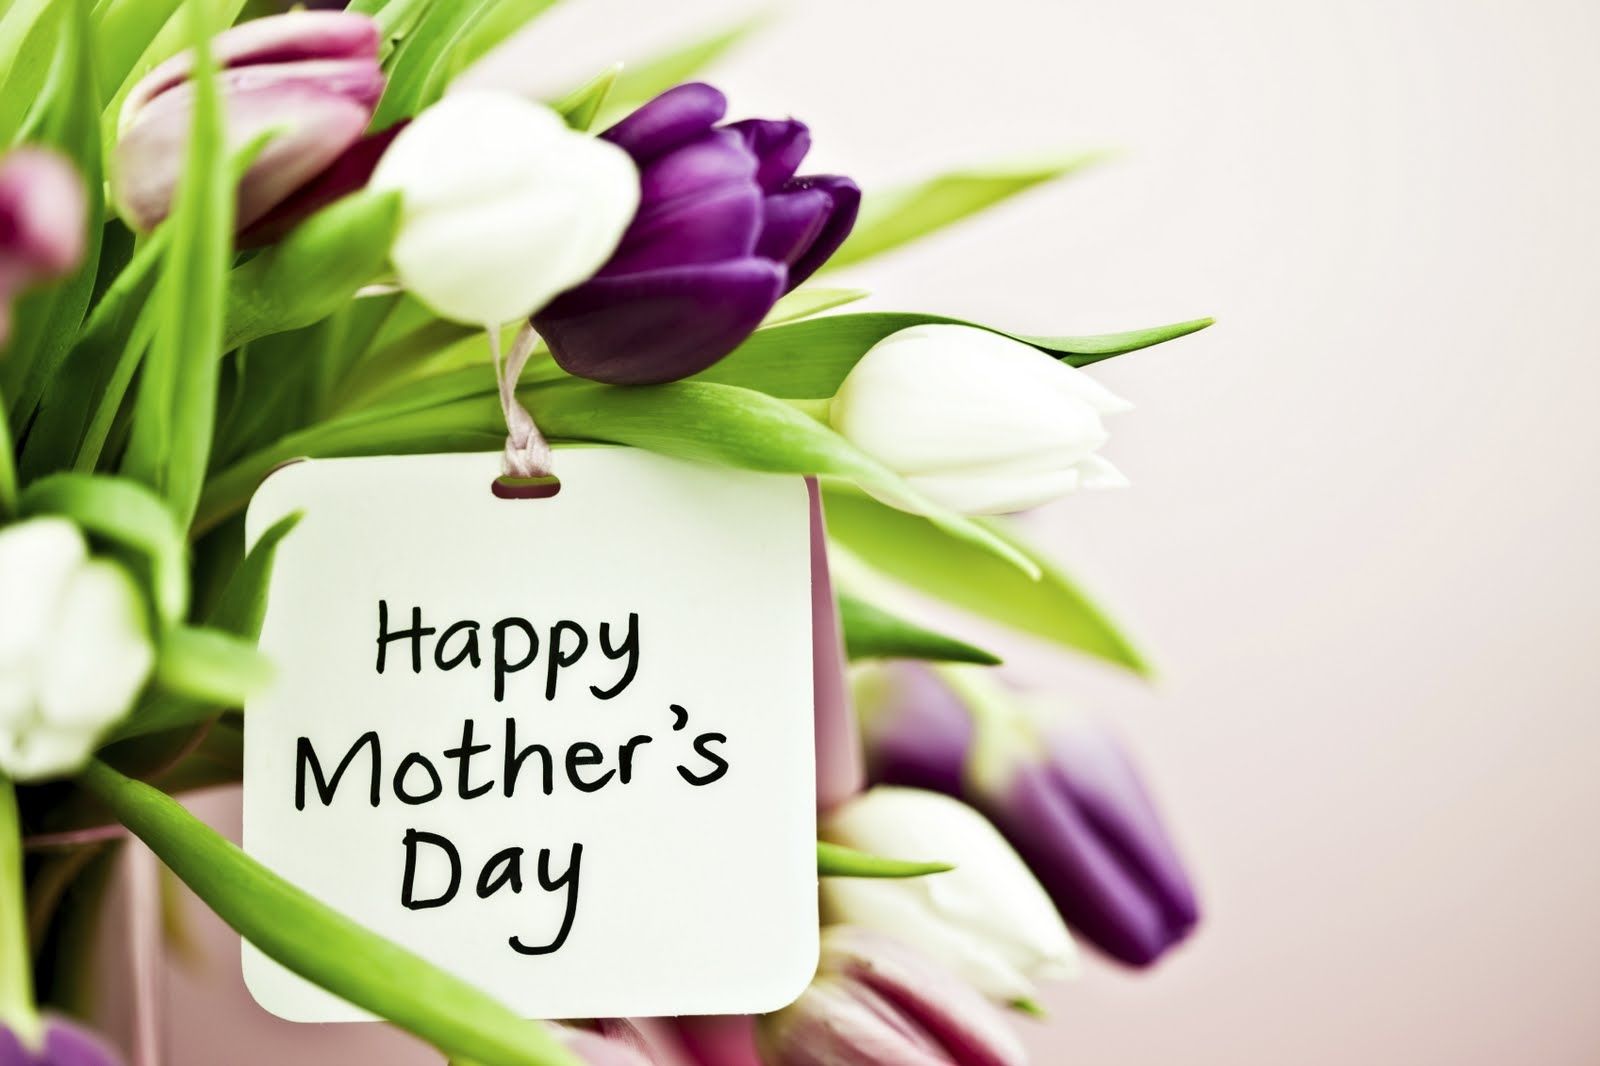 Happy Mothers Day Wallpaperfree Christian Wallpaper.blogspot.com